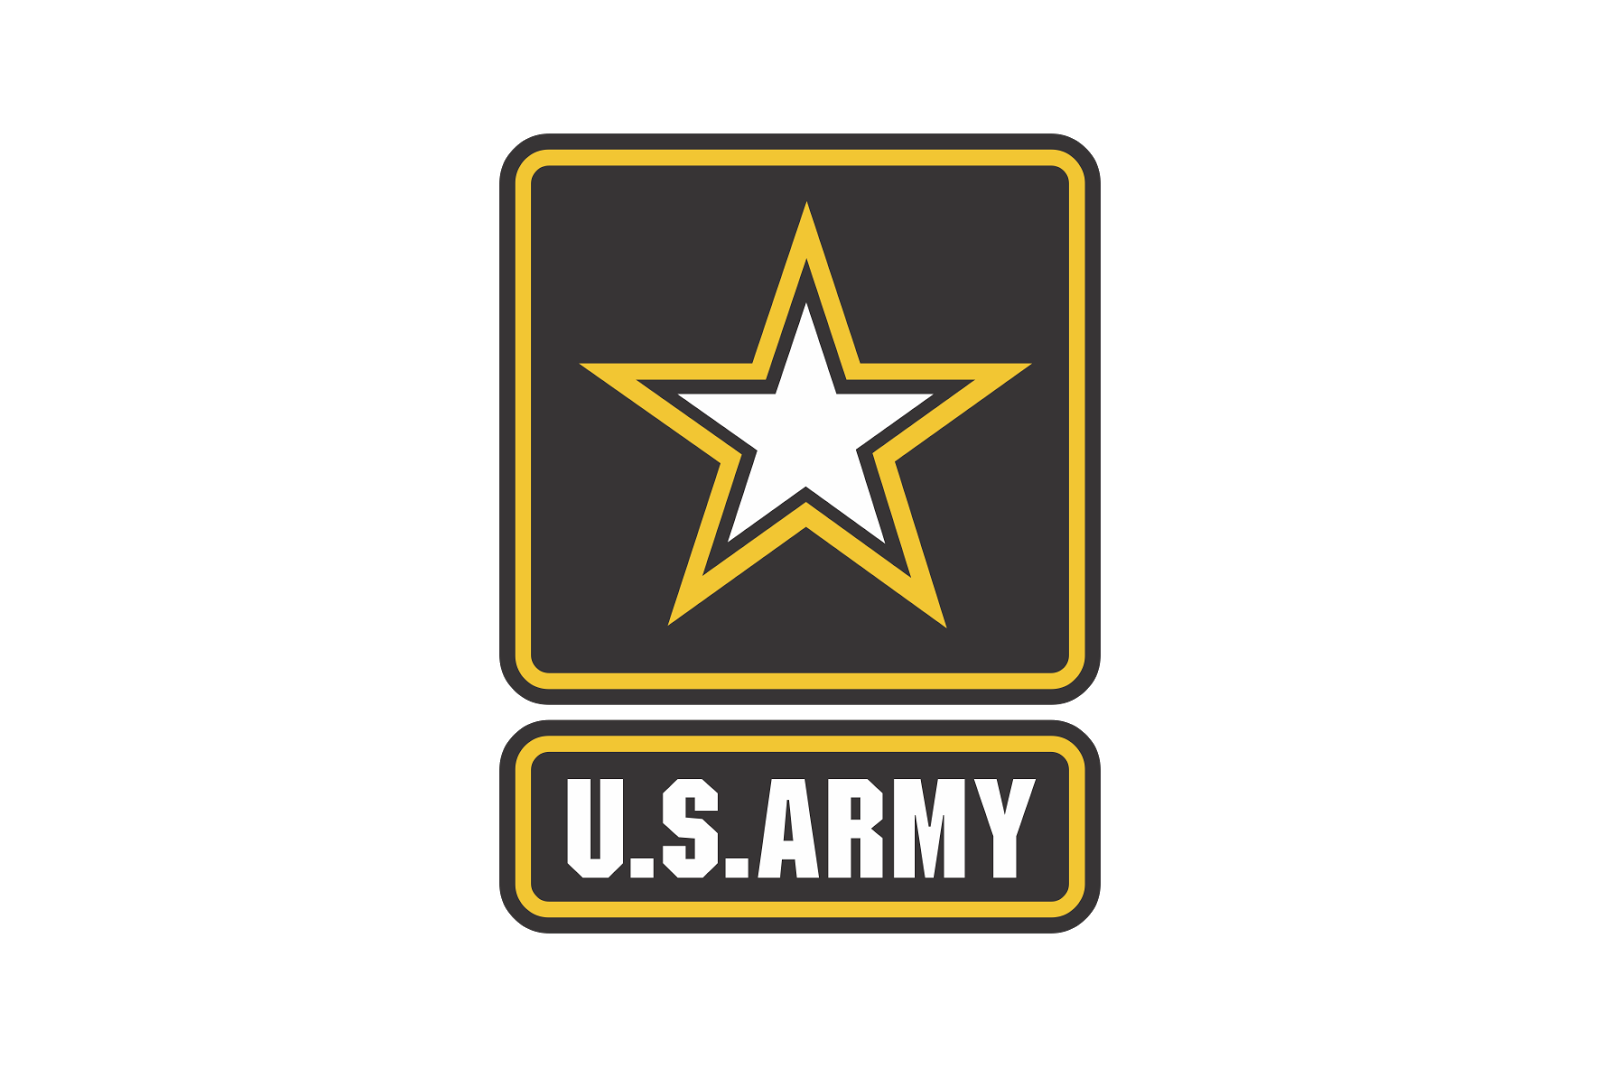 U.S. Army Logo PNG High-Quality Image